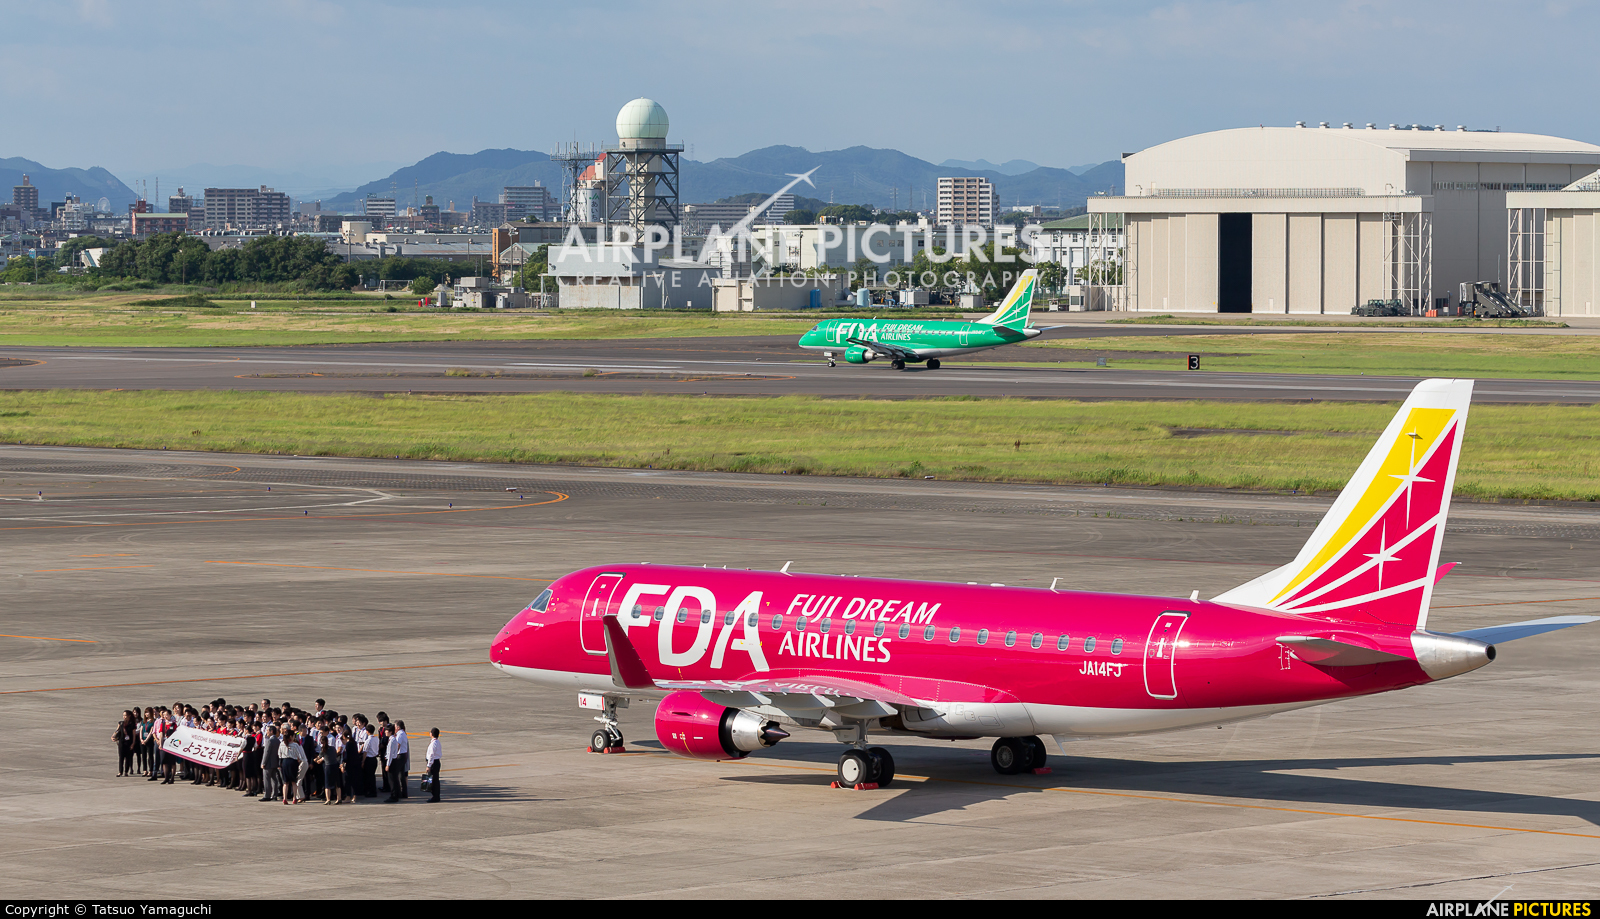 Fuji Dream Airlines JA14FJ aircraft at Nagoya - Komaki AB